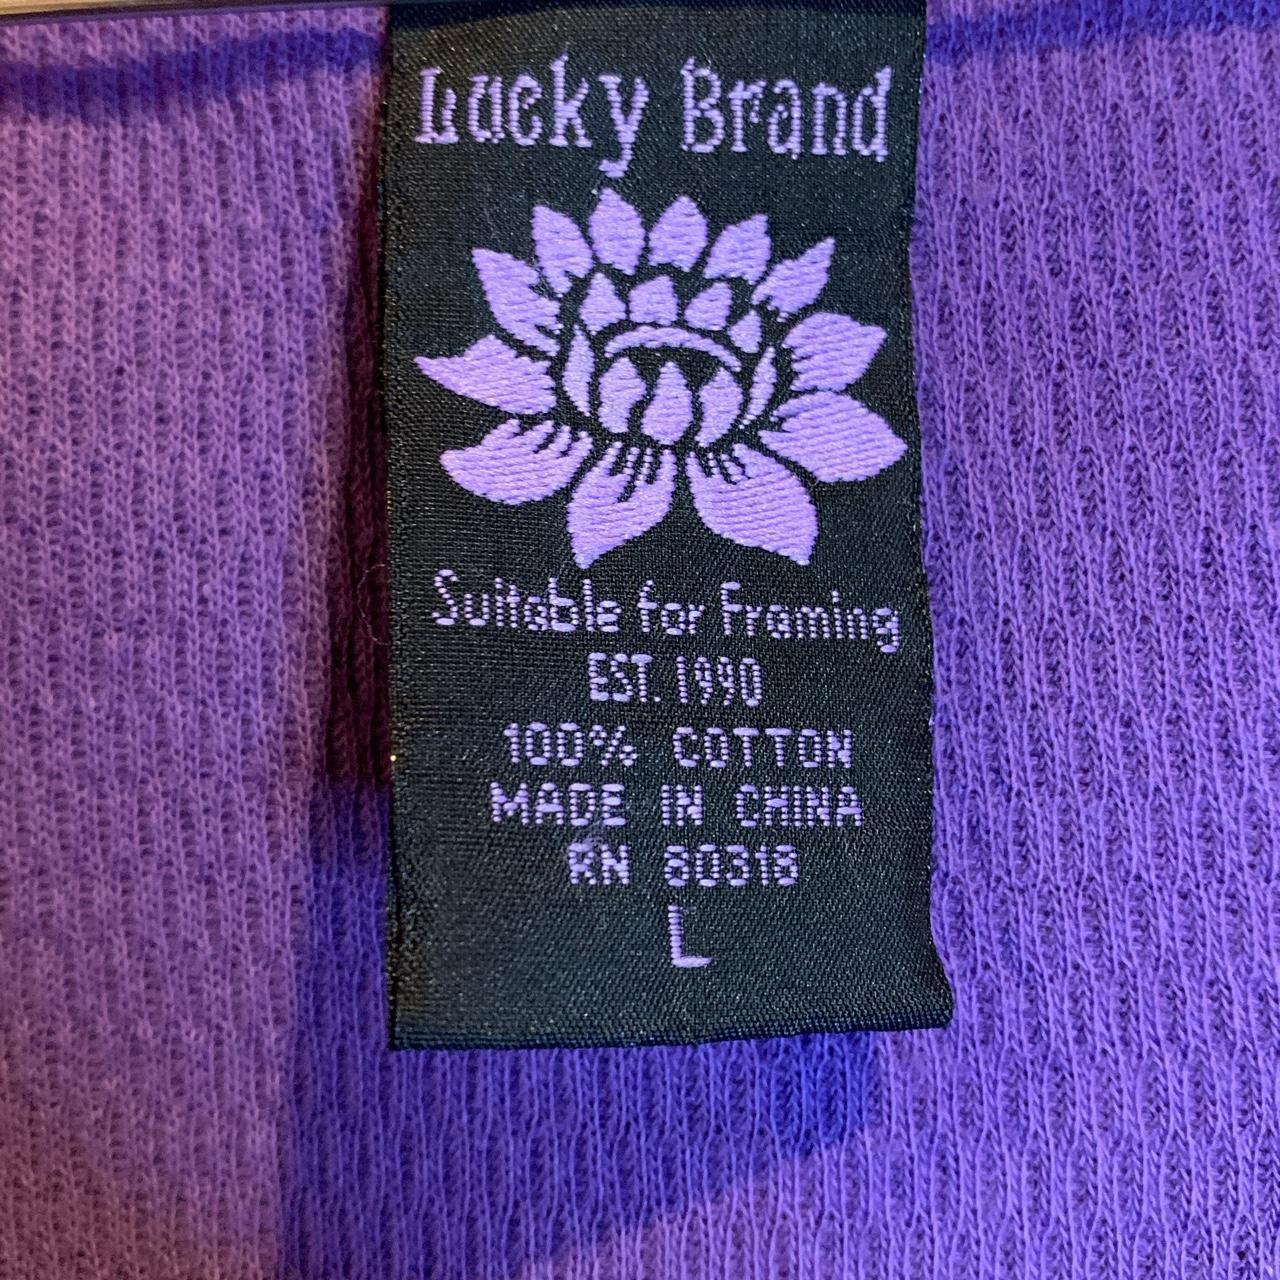 Lucky Brand Suitable for Framing Est. 1990 Purple - Depop